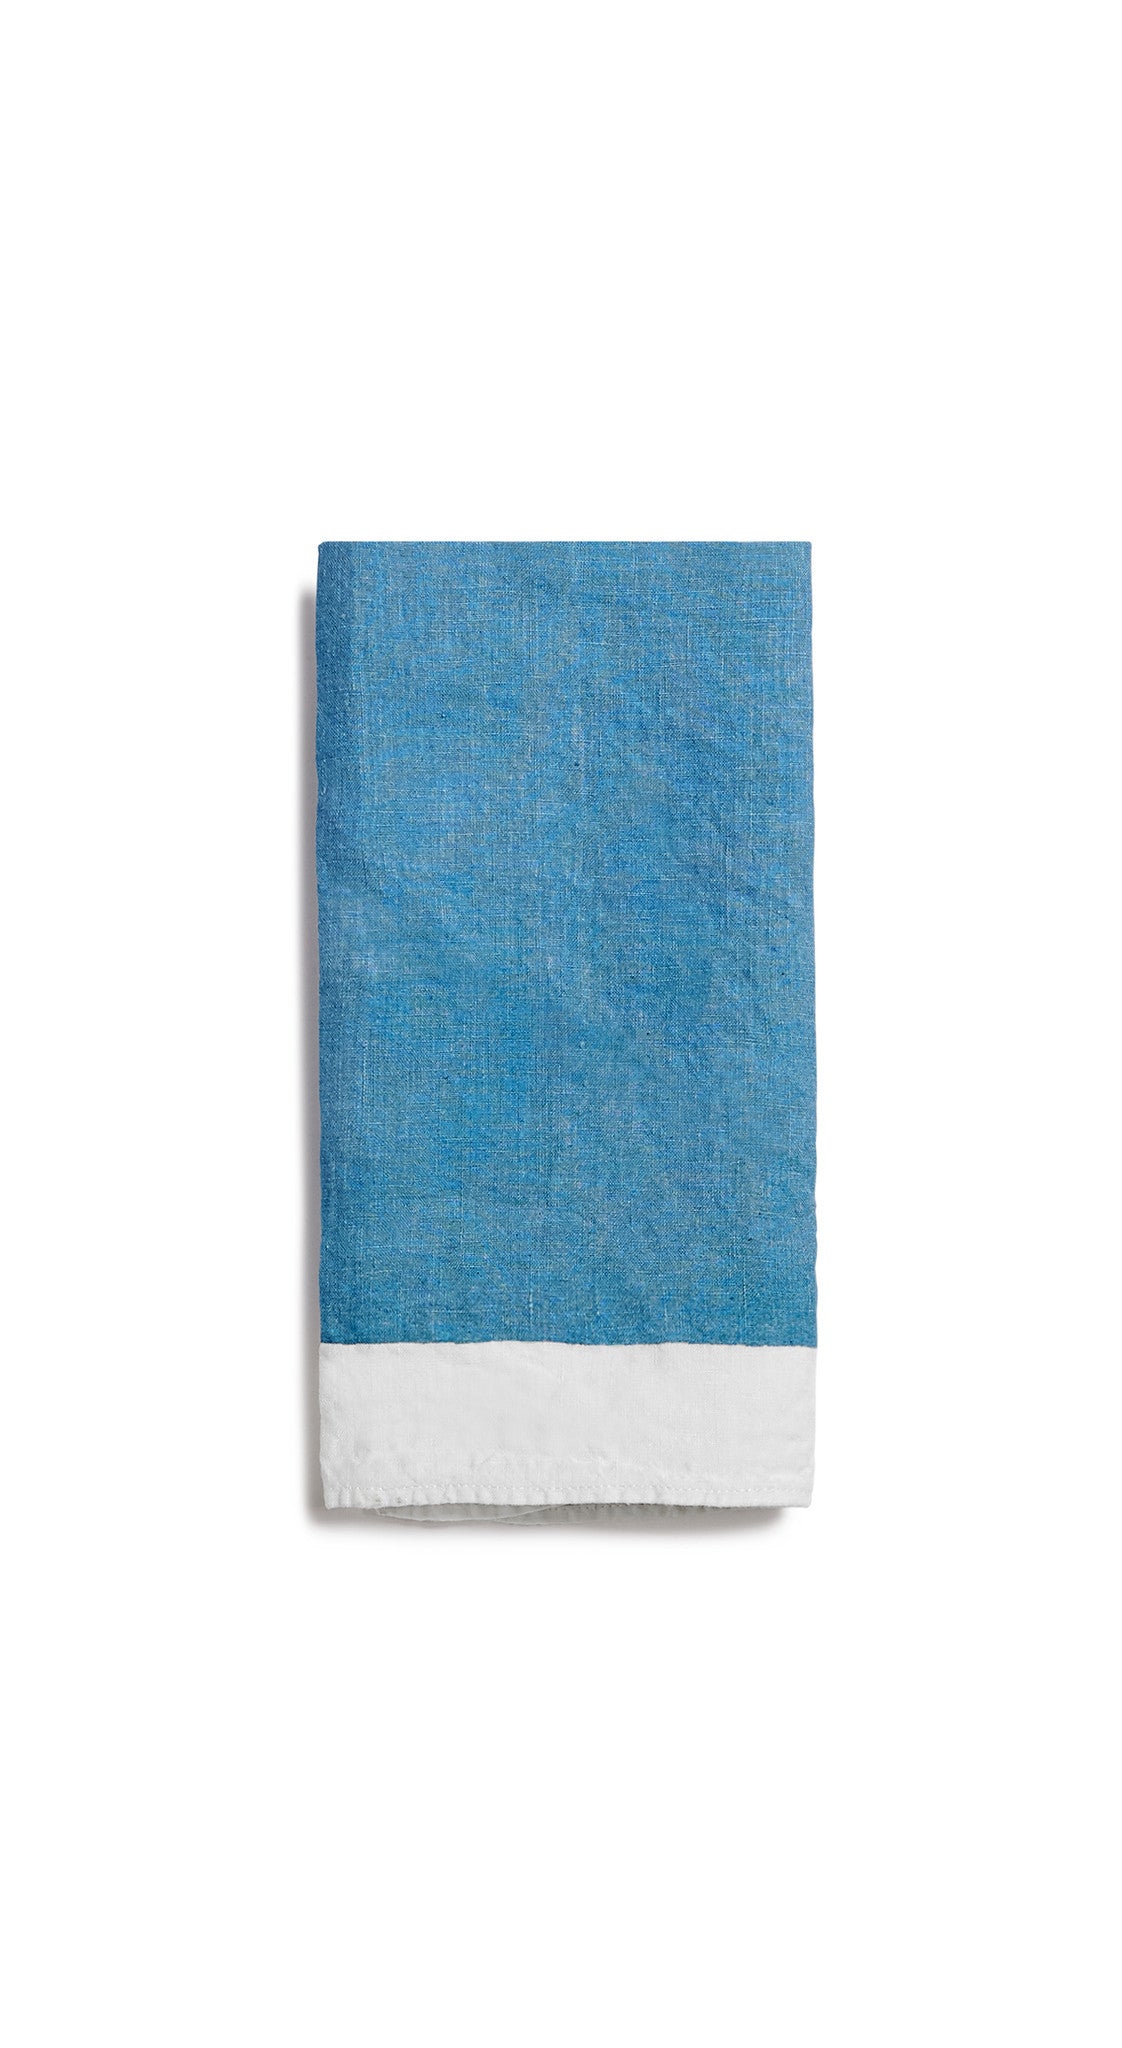 Full Field Linen Napkin in Sky Blue, 50x50cm